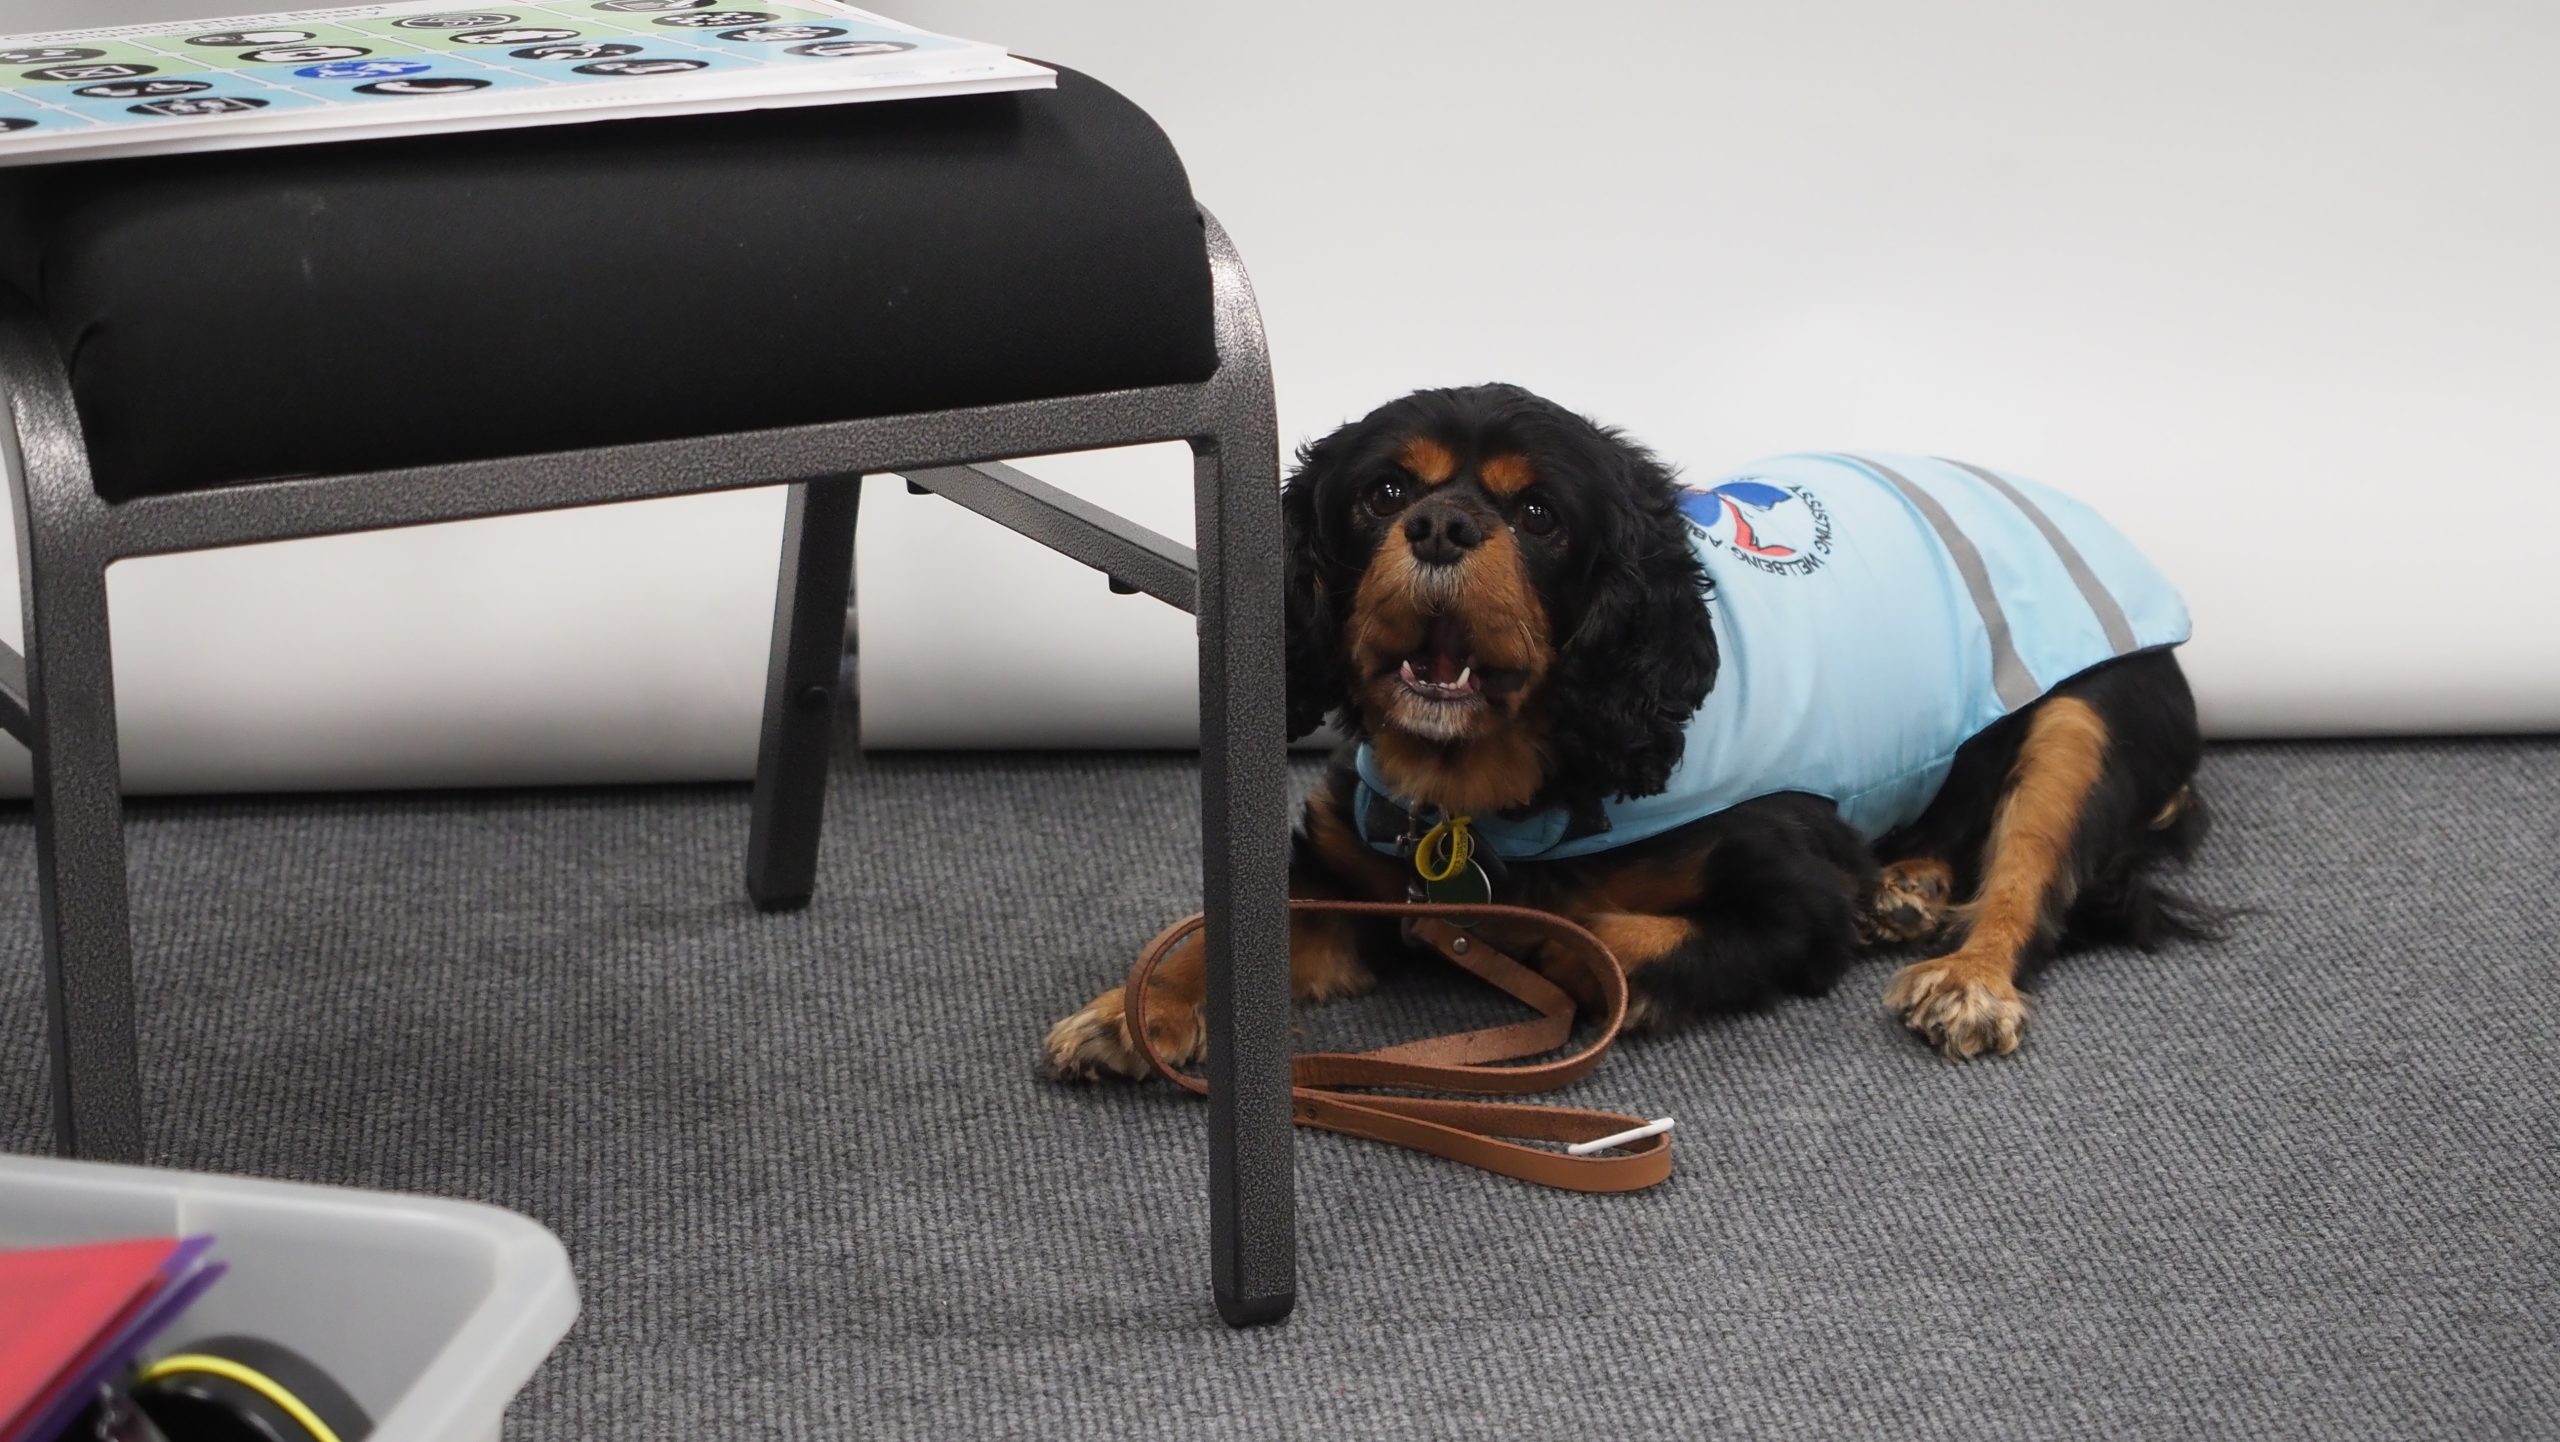 King Charles Spaniel dog sitting on floor wearing blue jacket